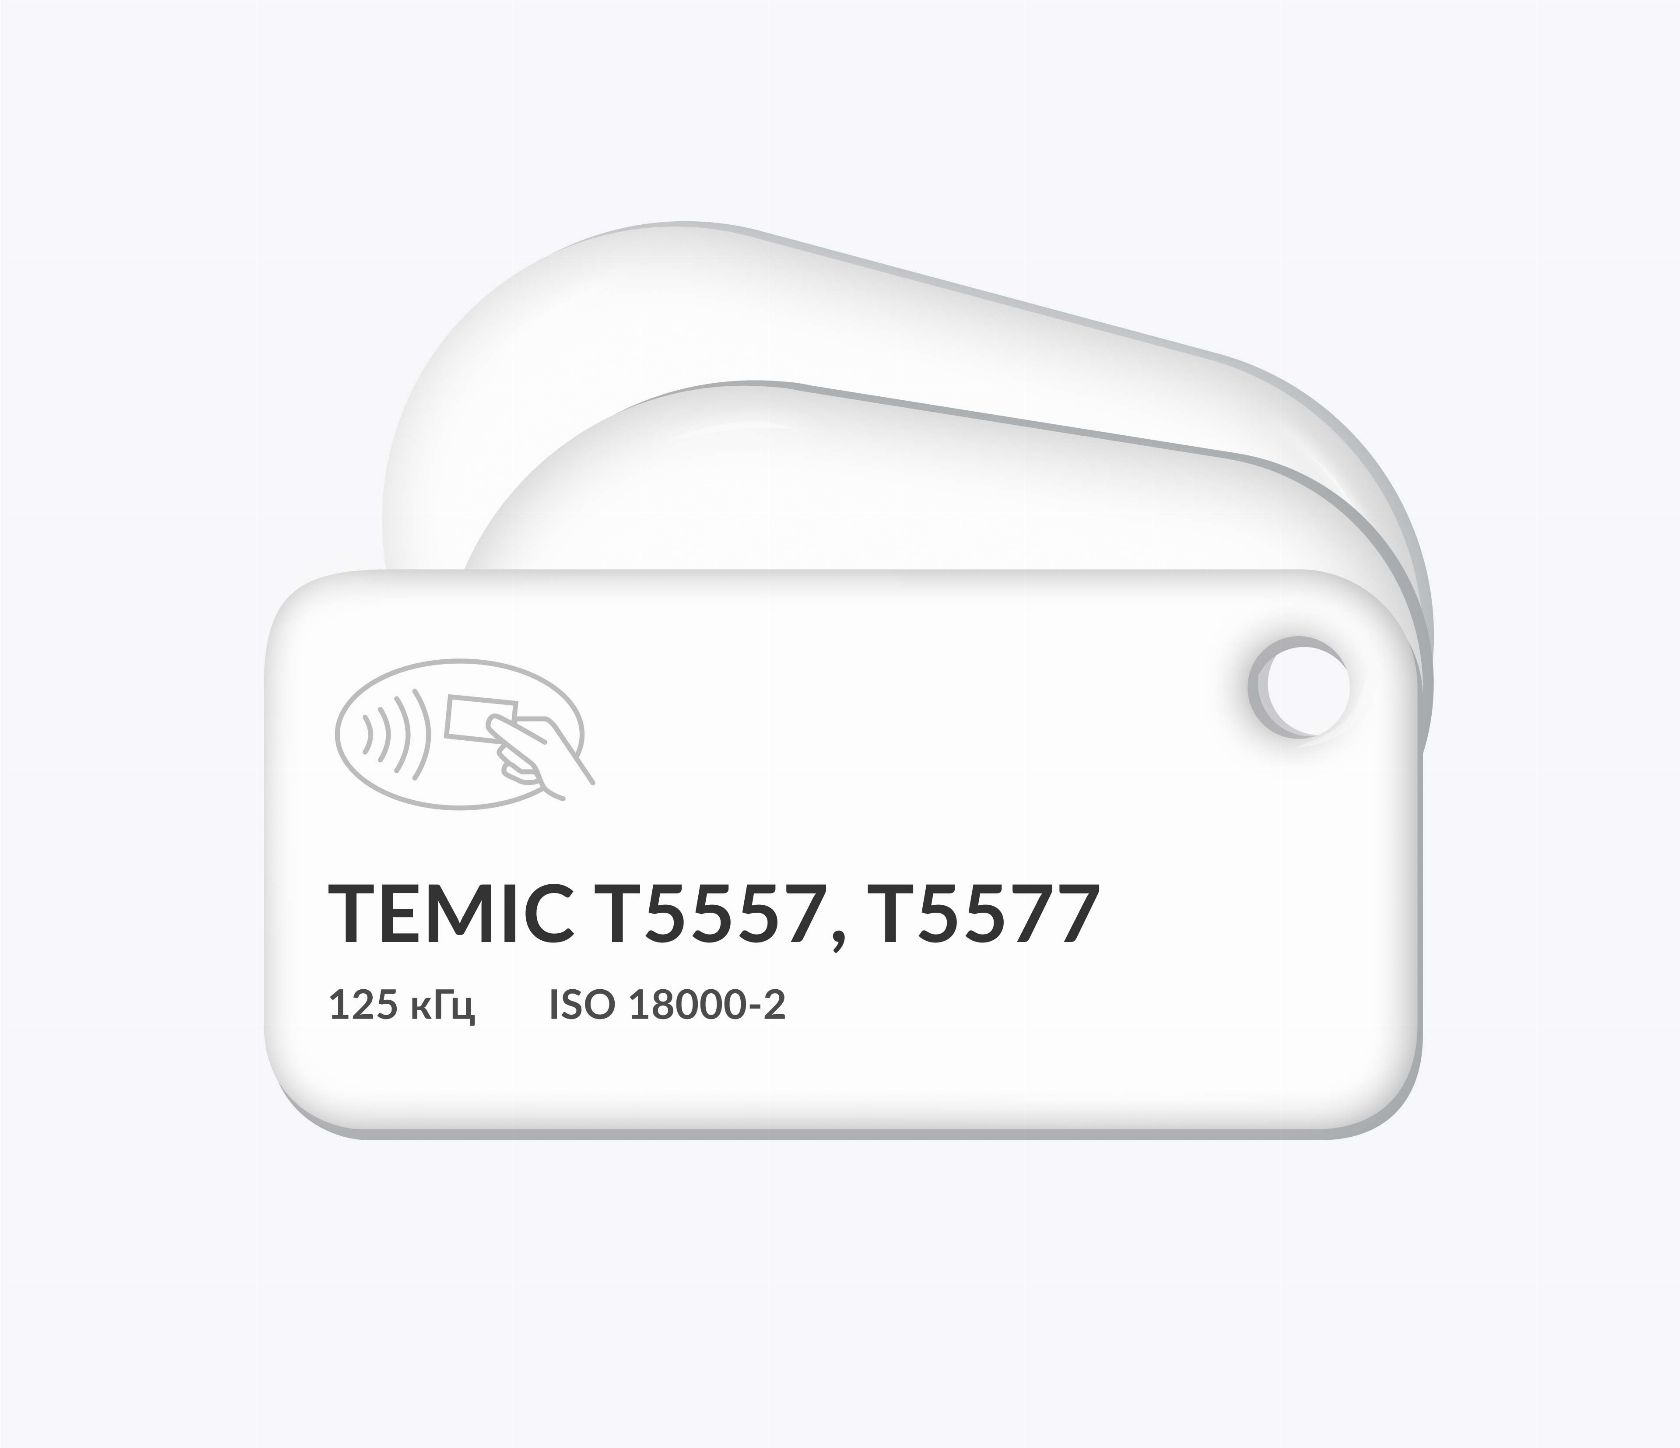 RFID-брелоки NEOKEY® с чипом T5557, T5577 Temic и вашим логотипом